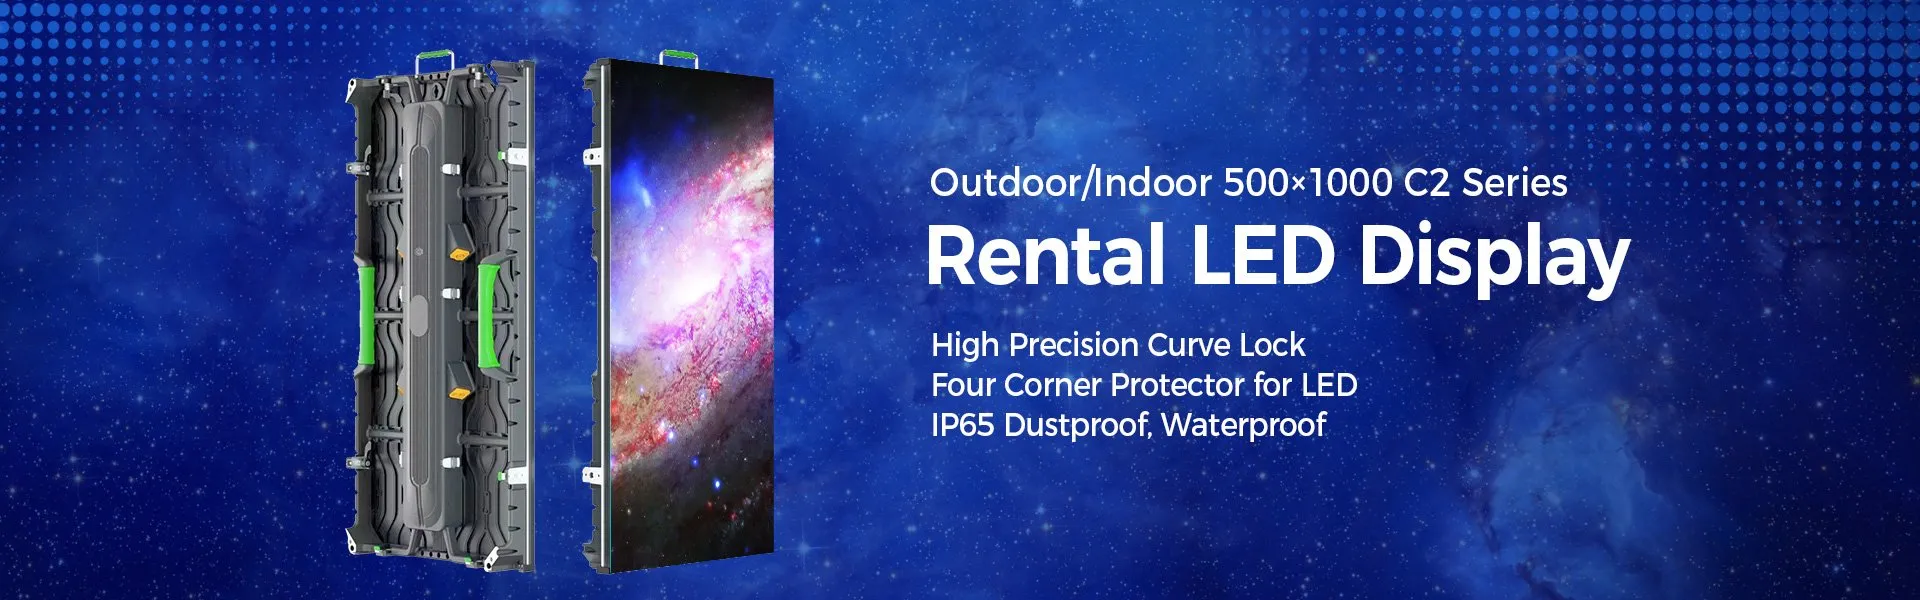 1000C2 Series 1000×500 Outdoor Indoor Rental LED Display Module P1.953 P2.604 P2.976 P3.91 P4.81